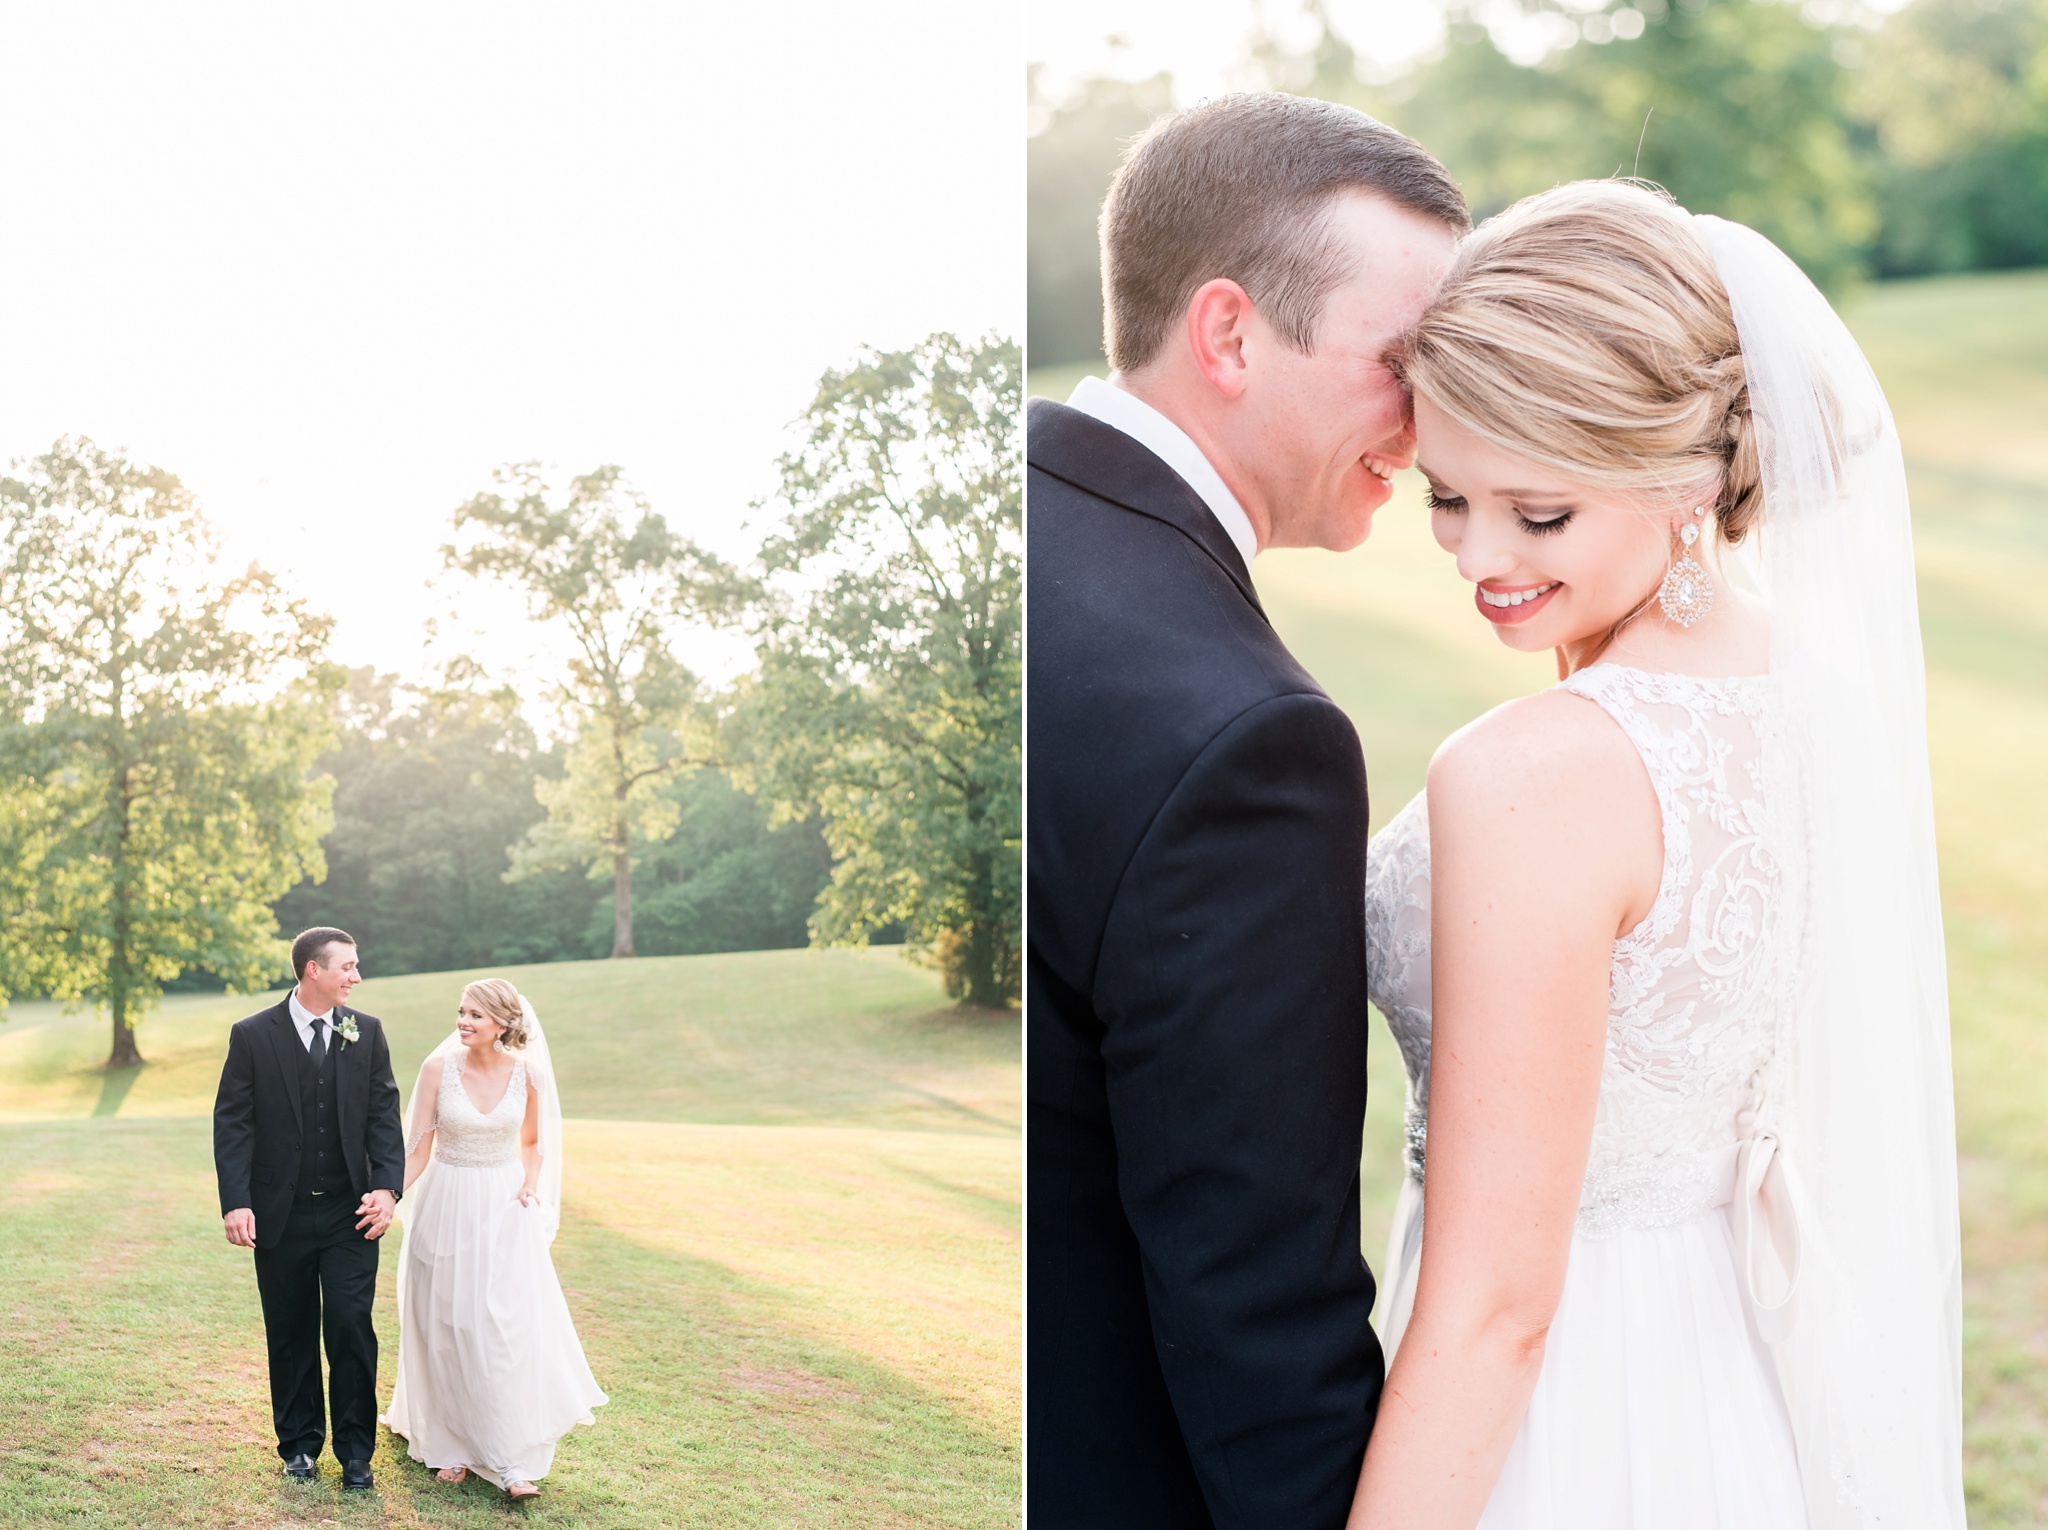 Gray and Black Classic Outdoor Wedding | Birmingham Alabama Wedding Photographers_0041.jpg